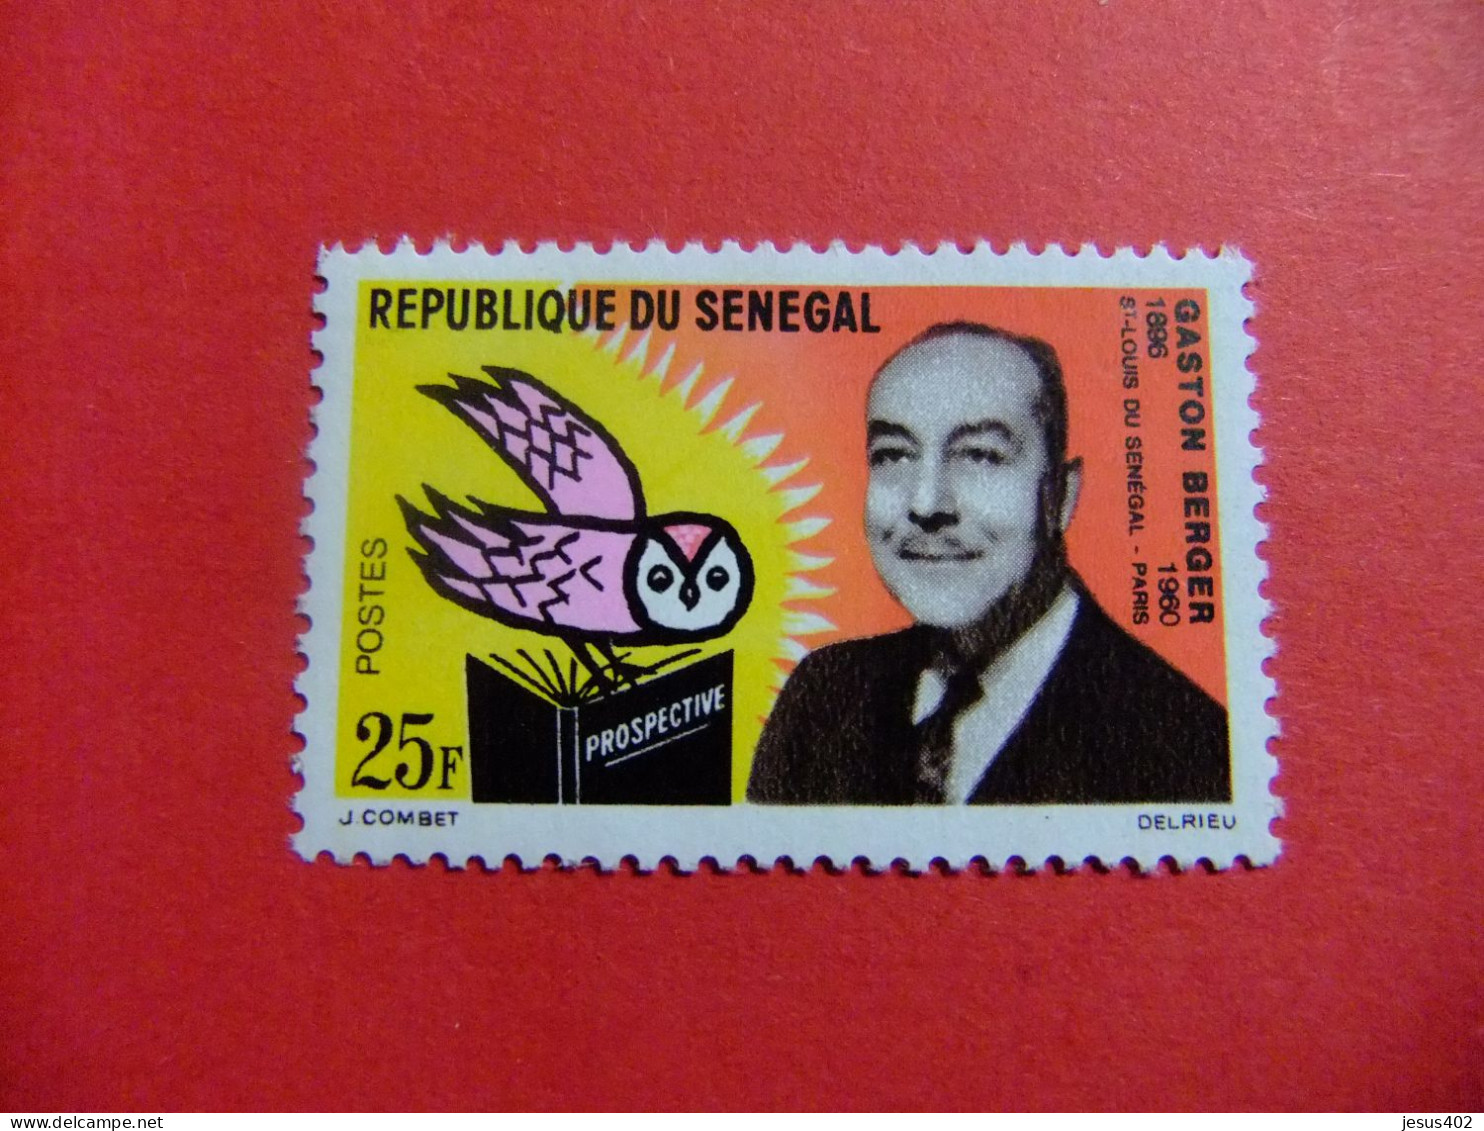 55 REPUBLICA SENEGAL 1963 / GASTON BERGER / YVERT 232 ** MNH - Senegal (1960-...)